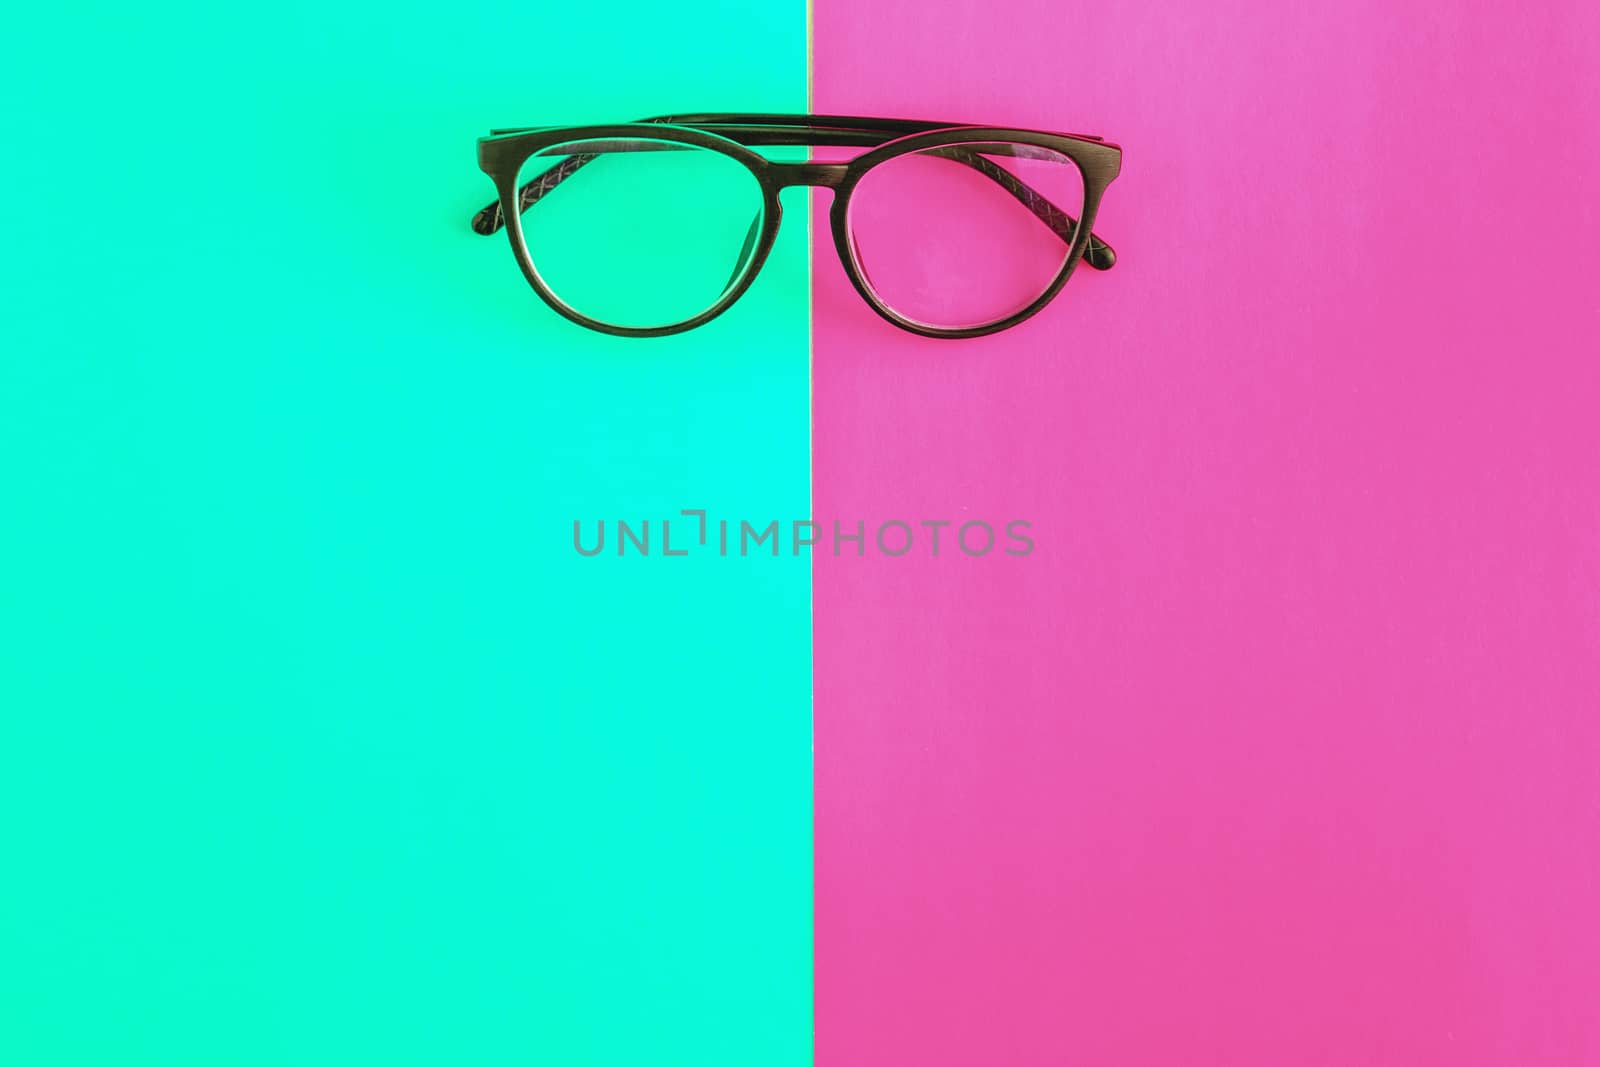 stylish glasses on a bright green-cyan and crimson-pink backgrou by Tanacha